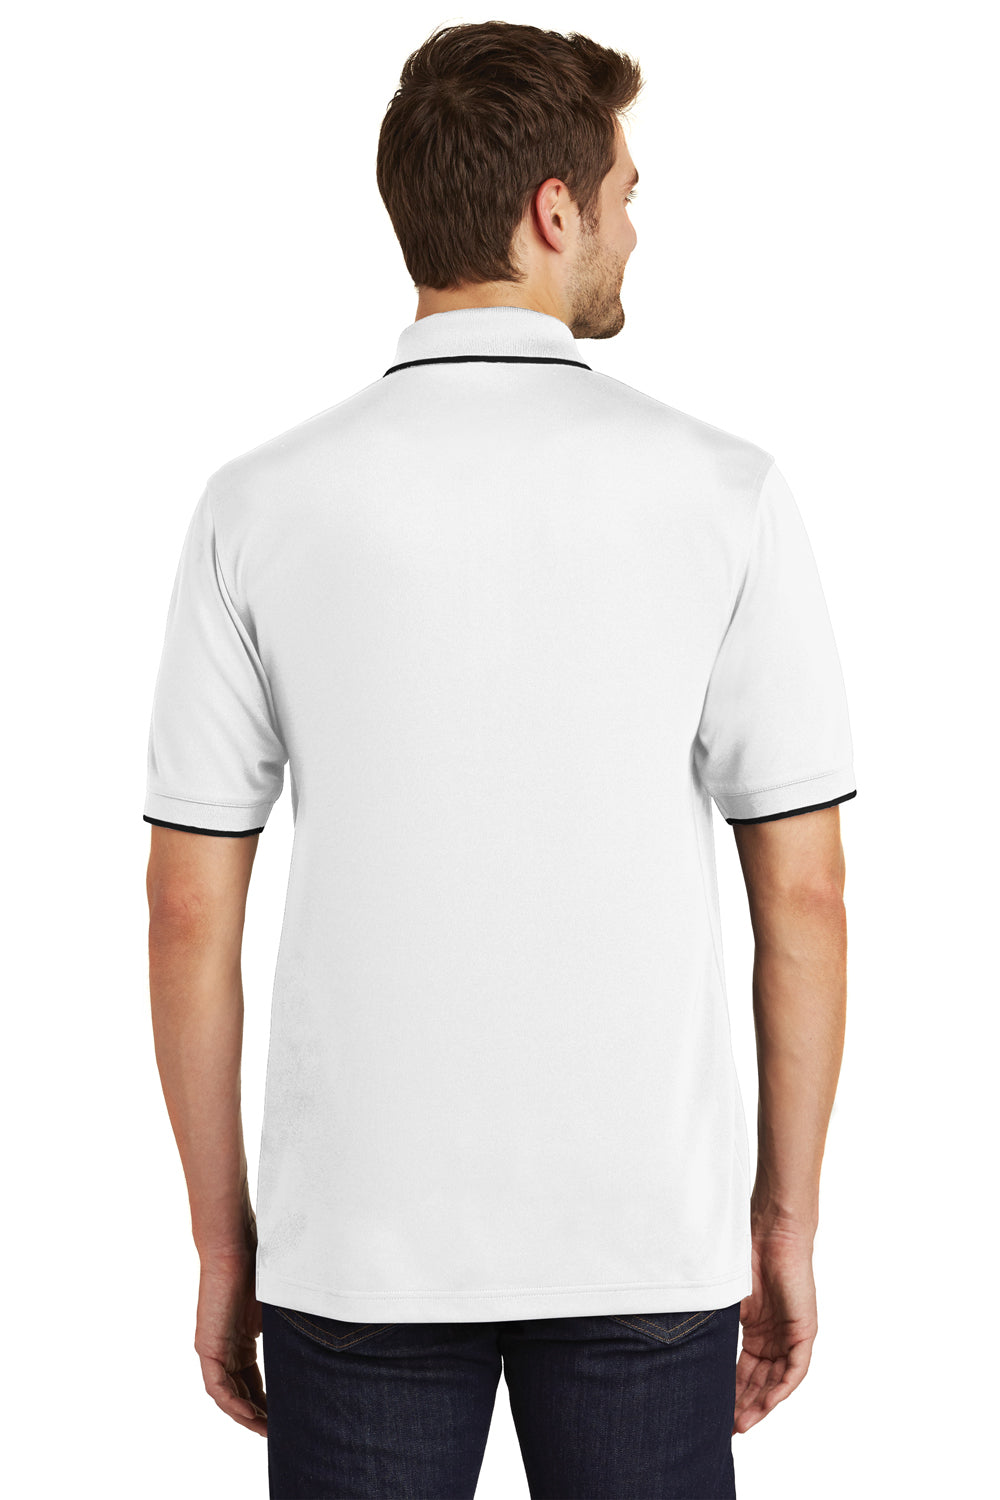 Port Authority K111 Mens Dry Zone Moisture Wicking Short Sleeve Polo Shirt White/Black Back